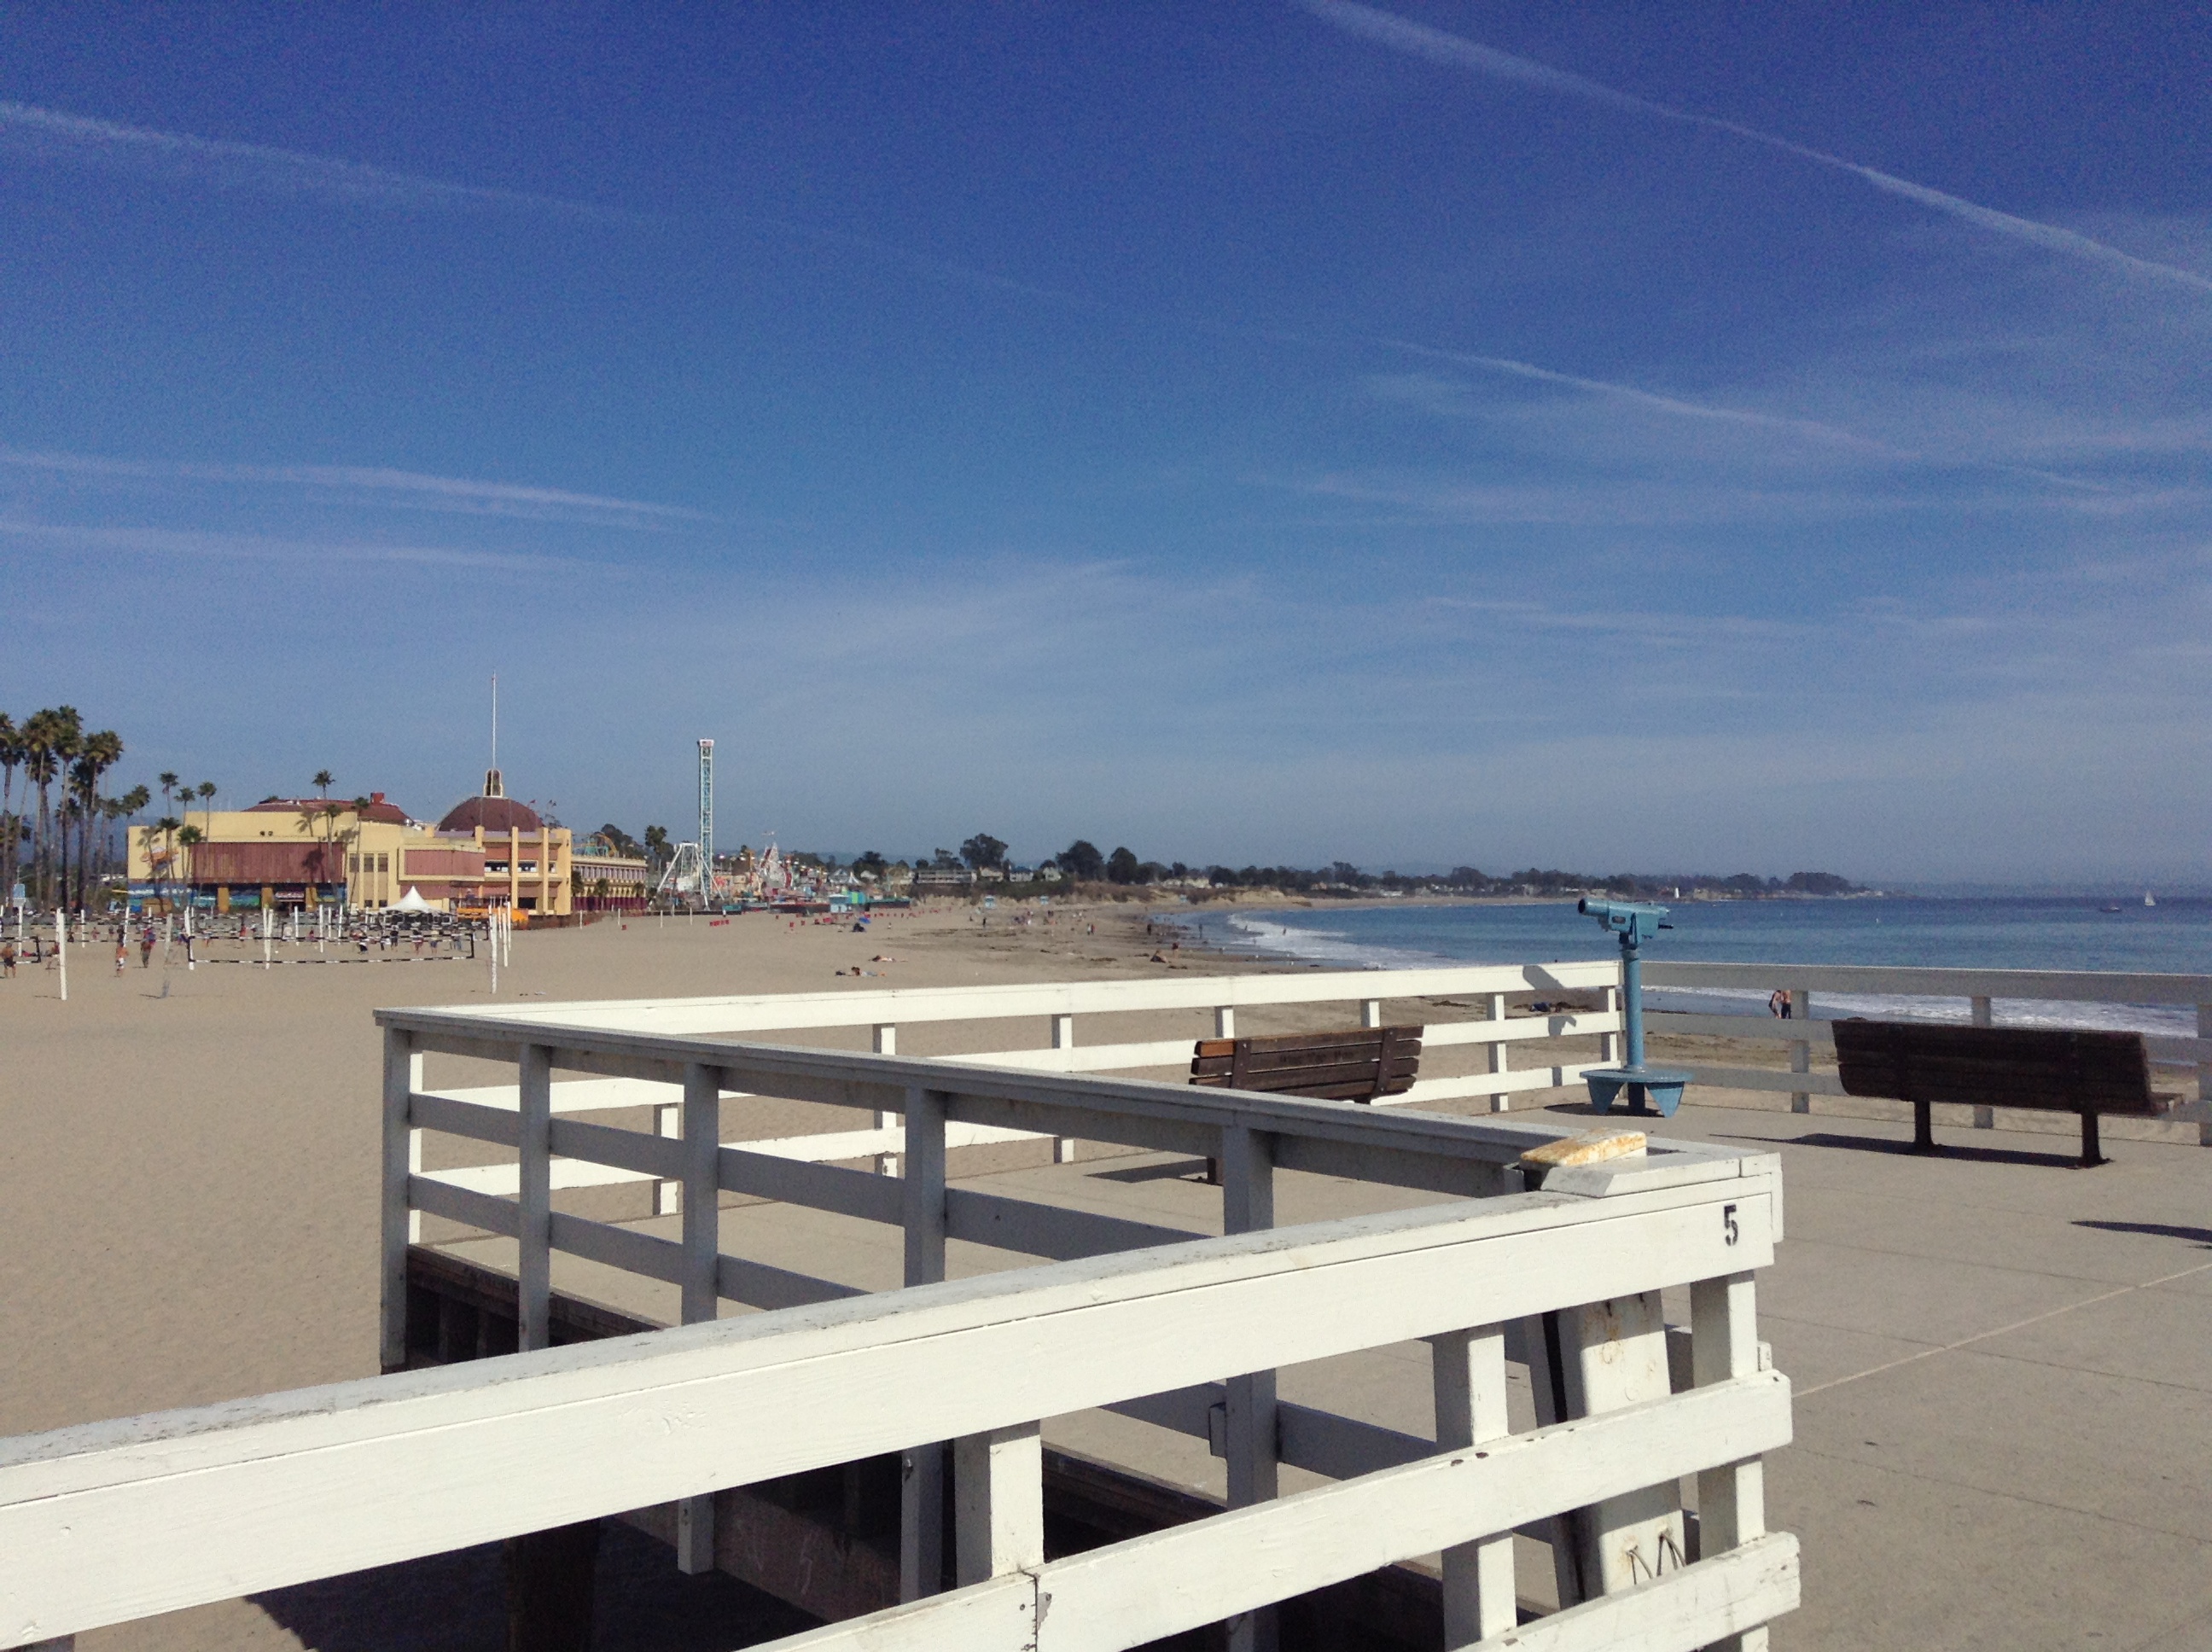 Santa Cruz view of boardwalk / beach from base of pier